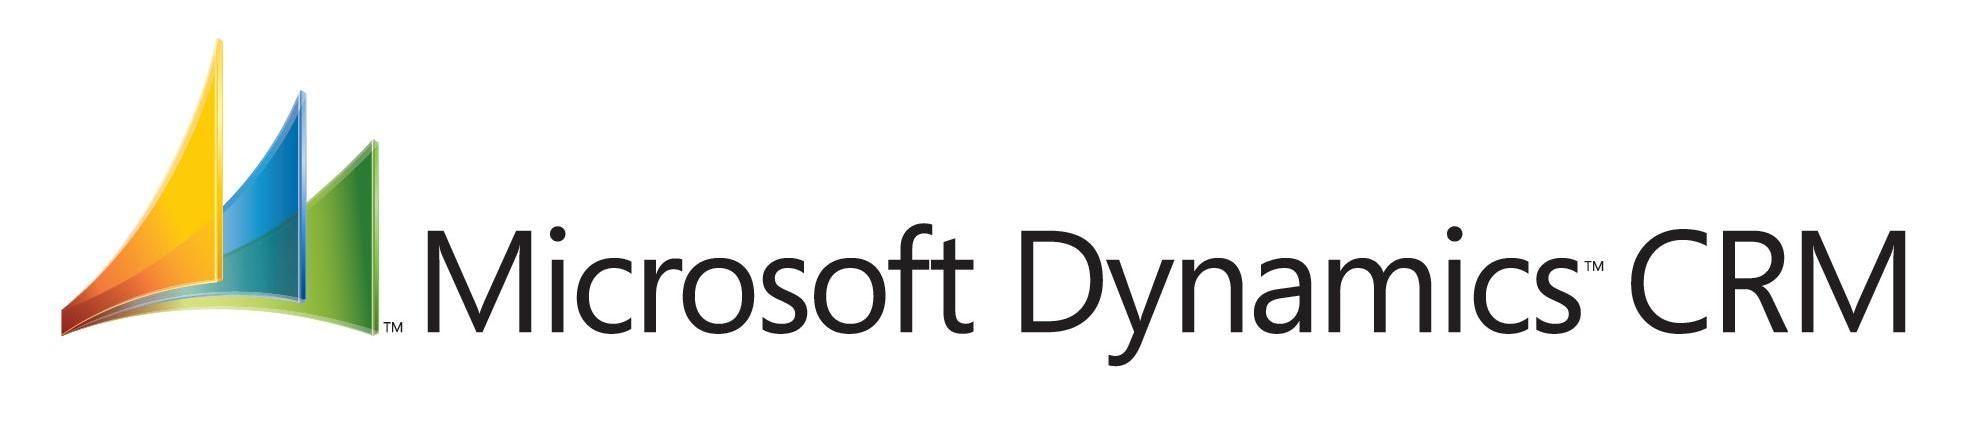 Microsoft CRM Logo - CLS Training Center - Microsoft Dynamics